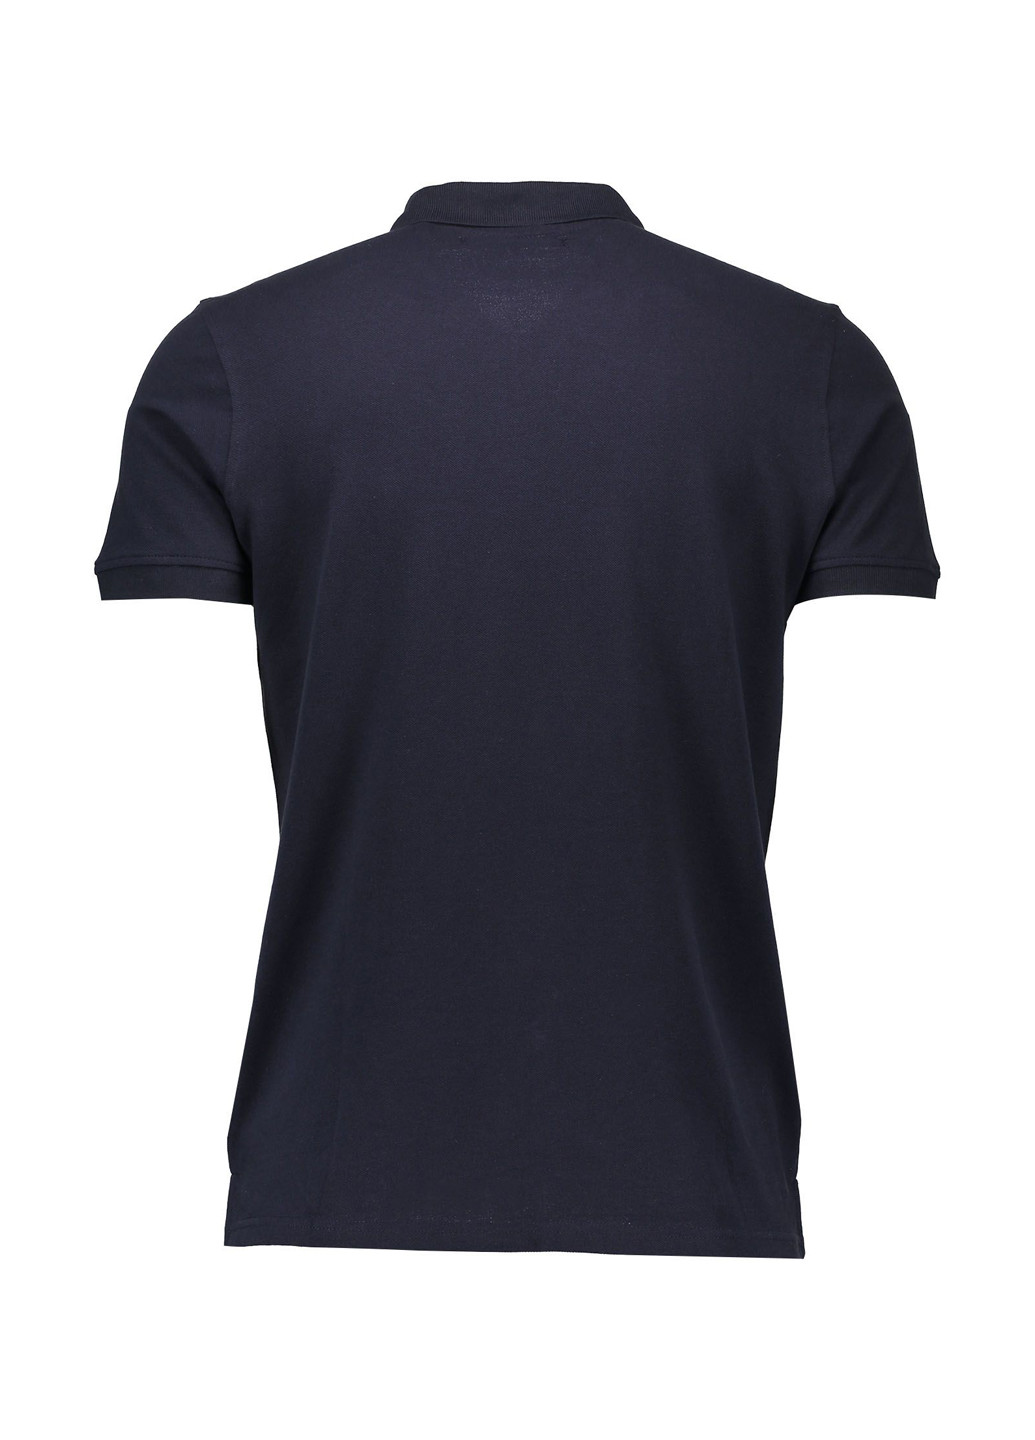 Темно-синяя футболка-поло для мужчин Piazza Italia однотонная